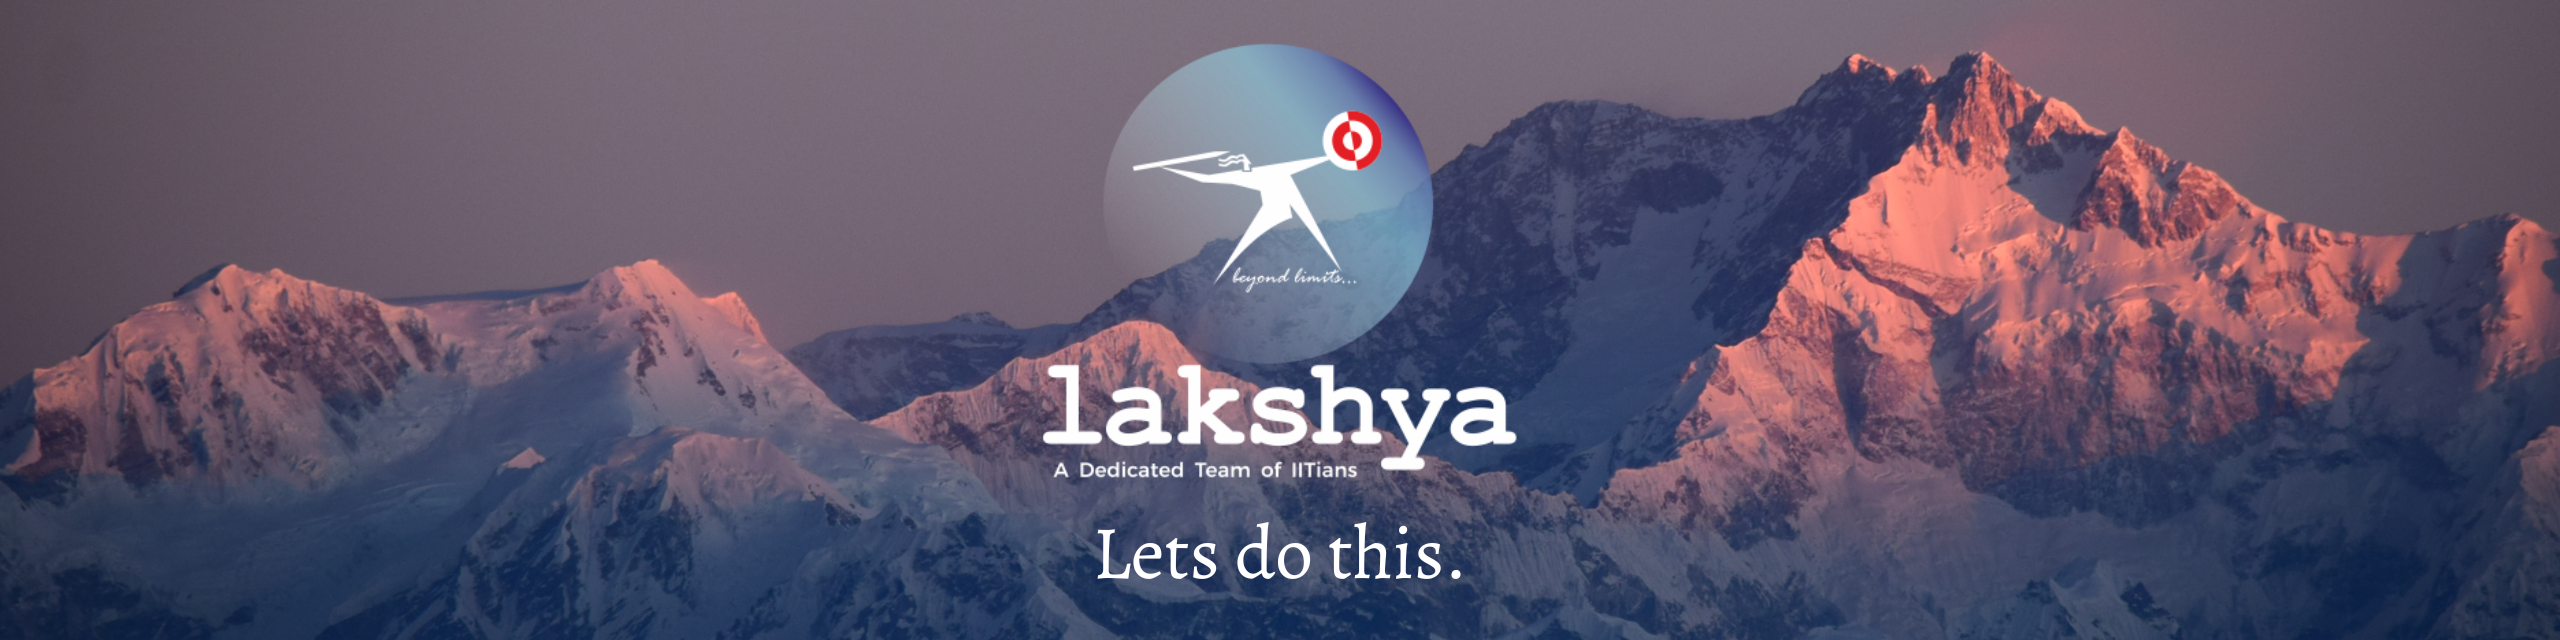 lakshya